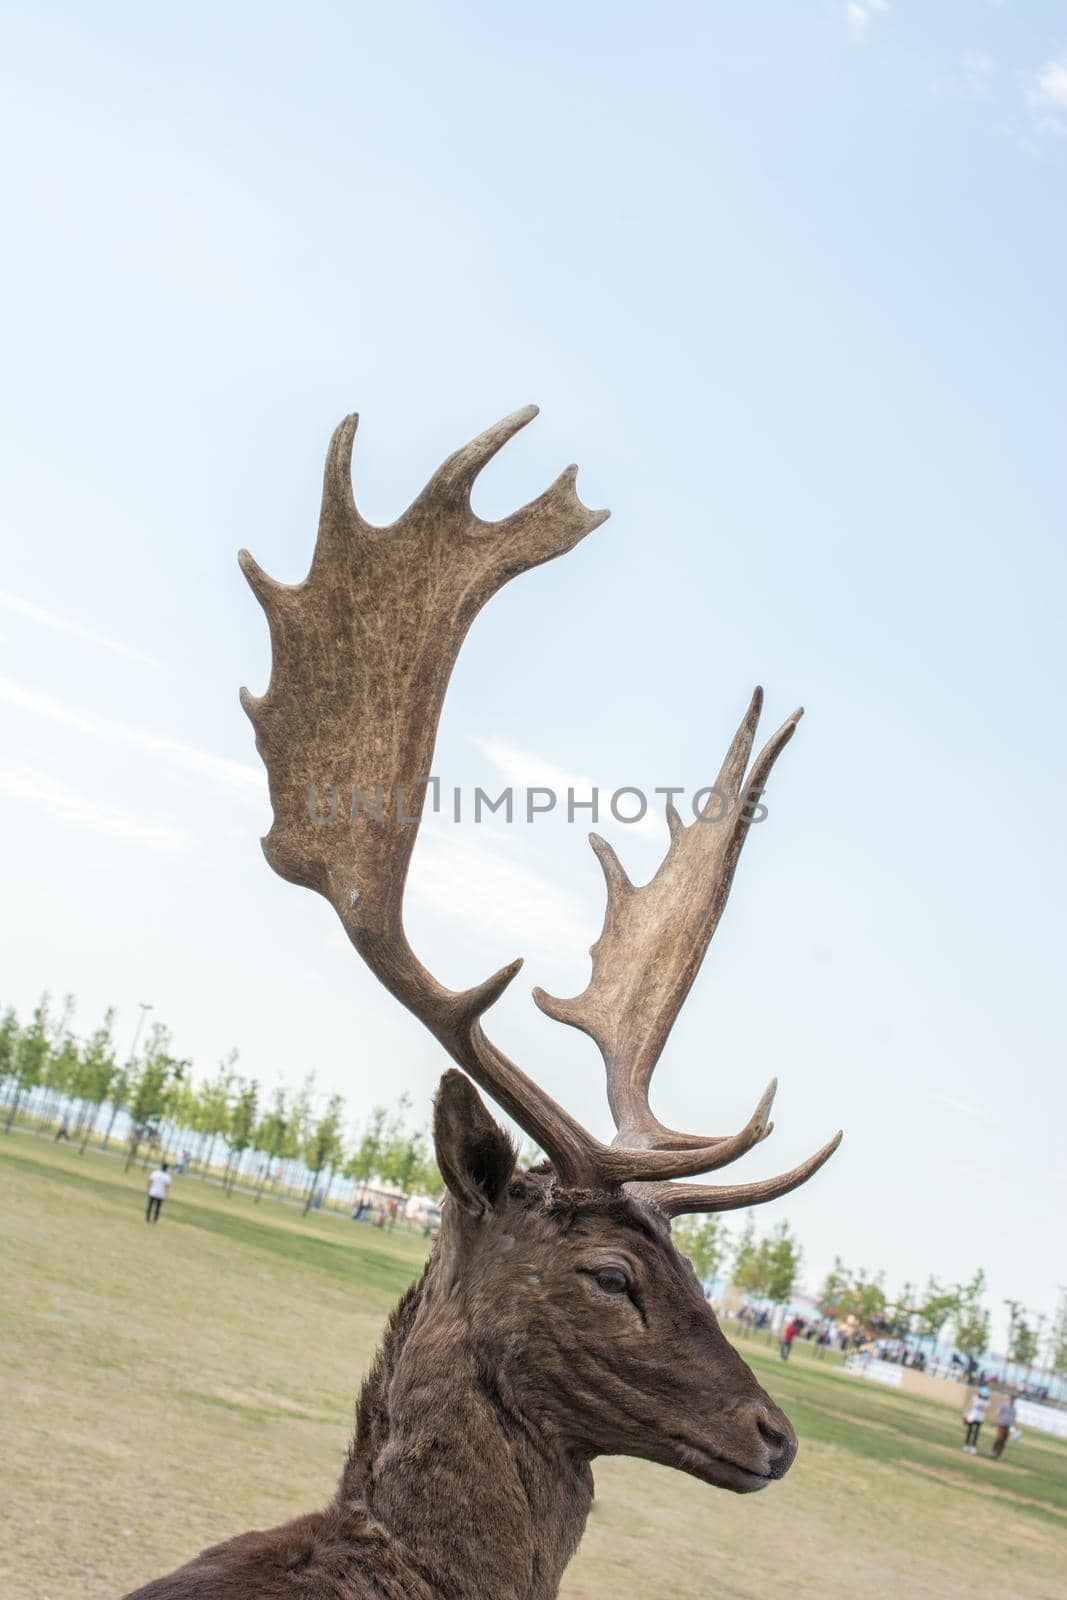 Preserved deer specimen on blue sky background by berkay